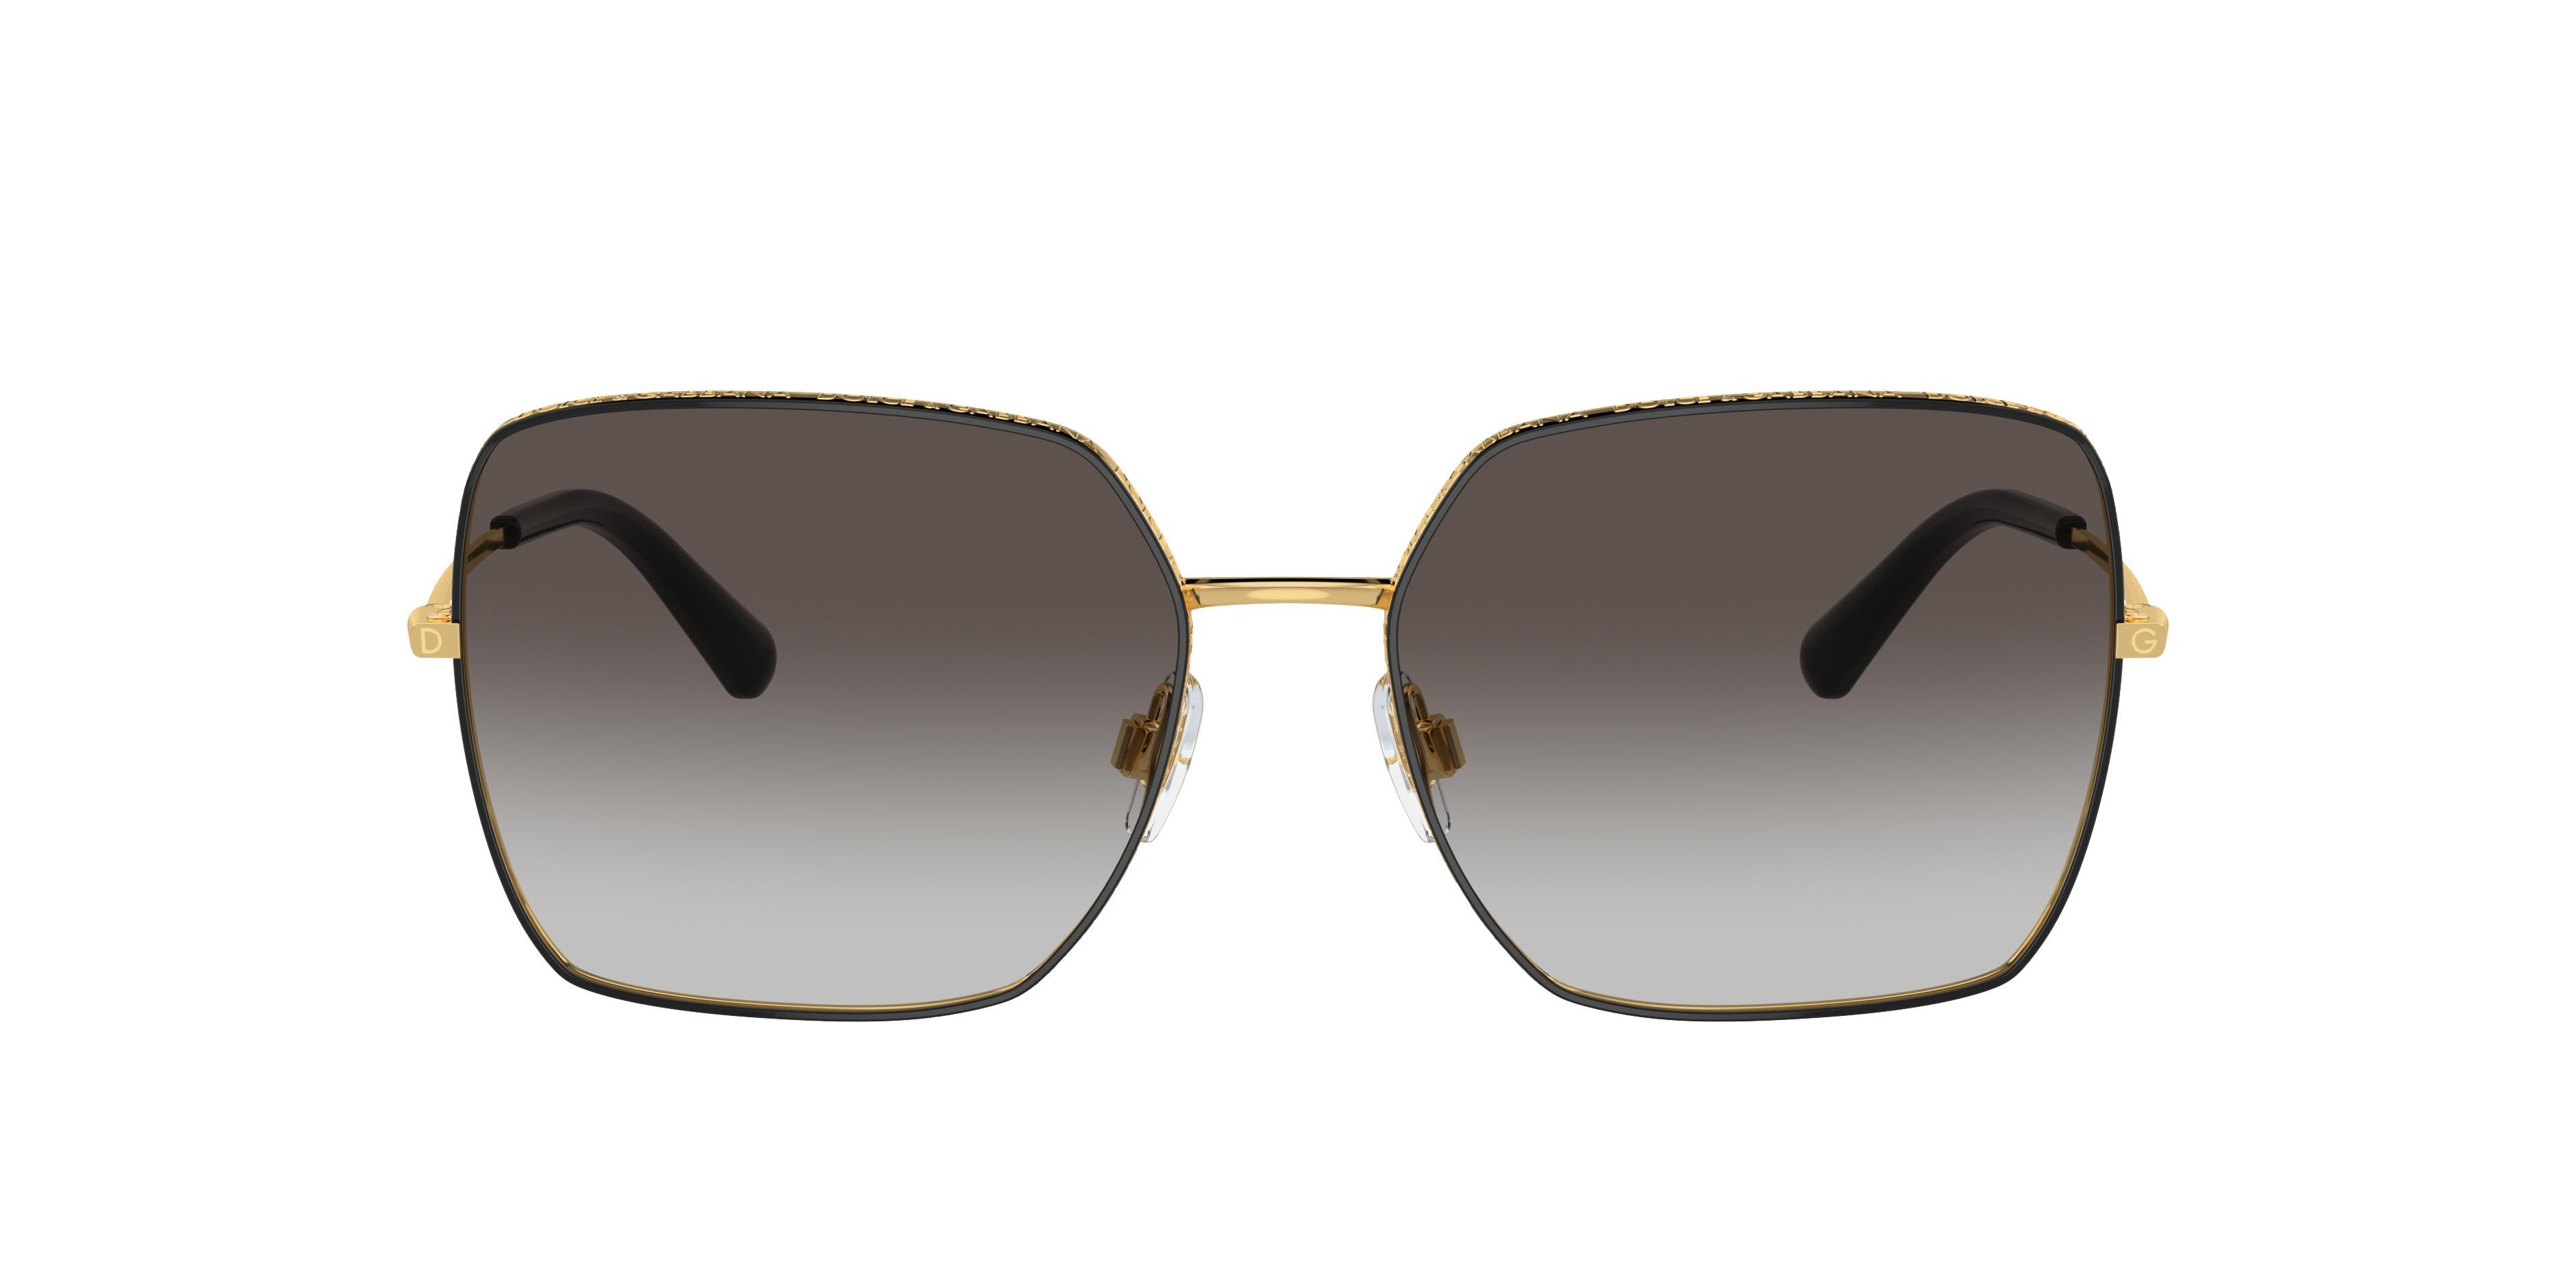 Dolce & Gabbana 57mm Gradient Square Sunglasses Product Image